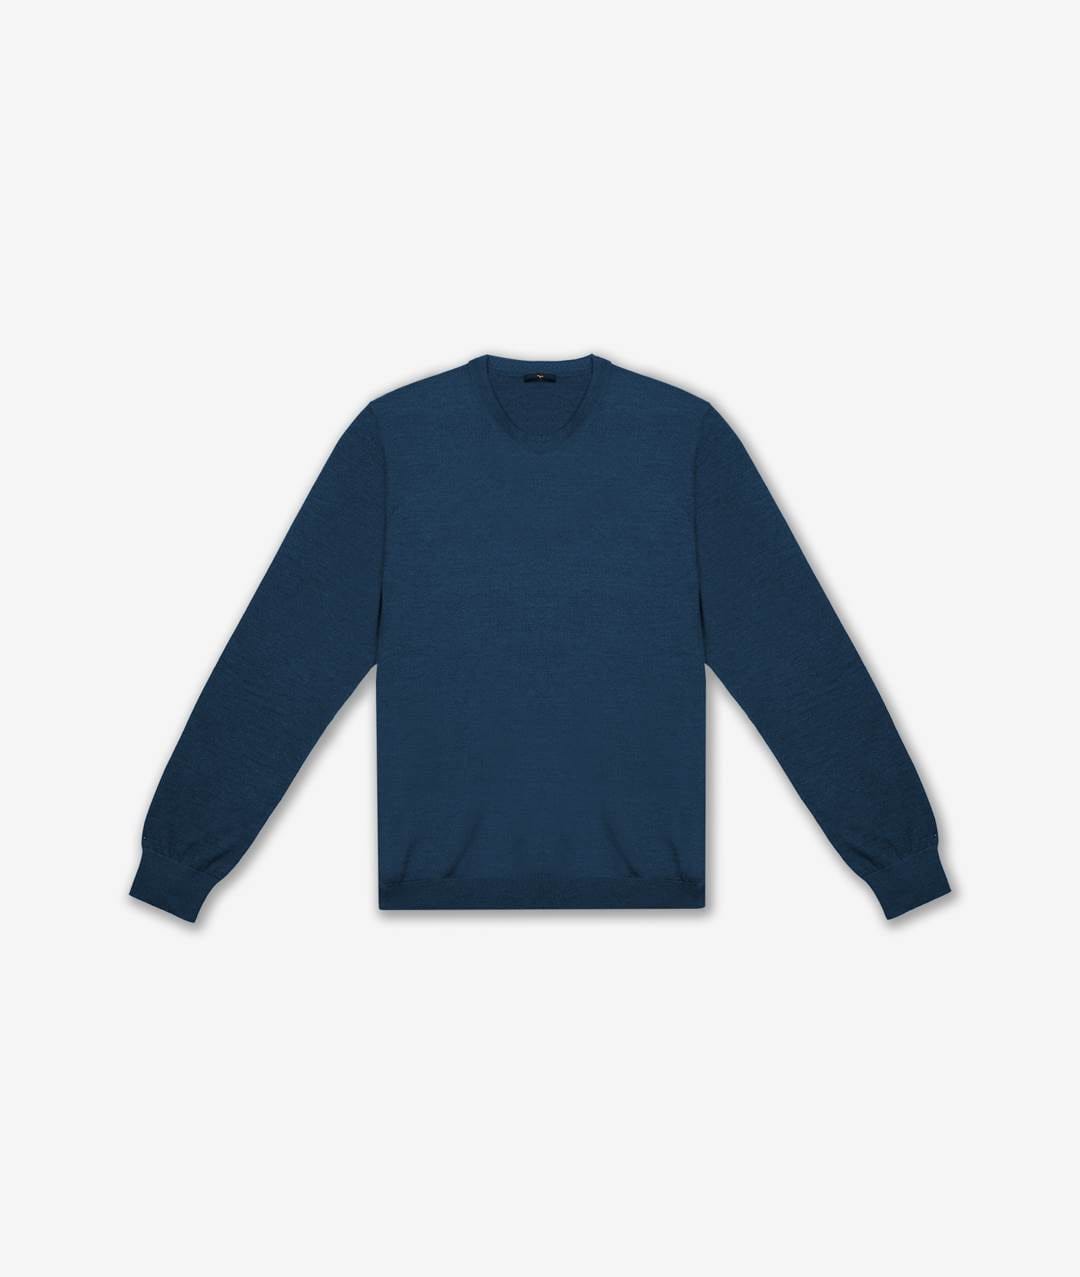 Larusmiani Crew Neck Sweater Sweater In Blue